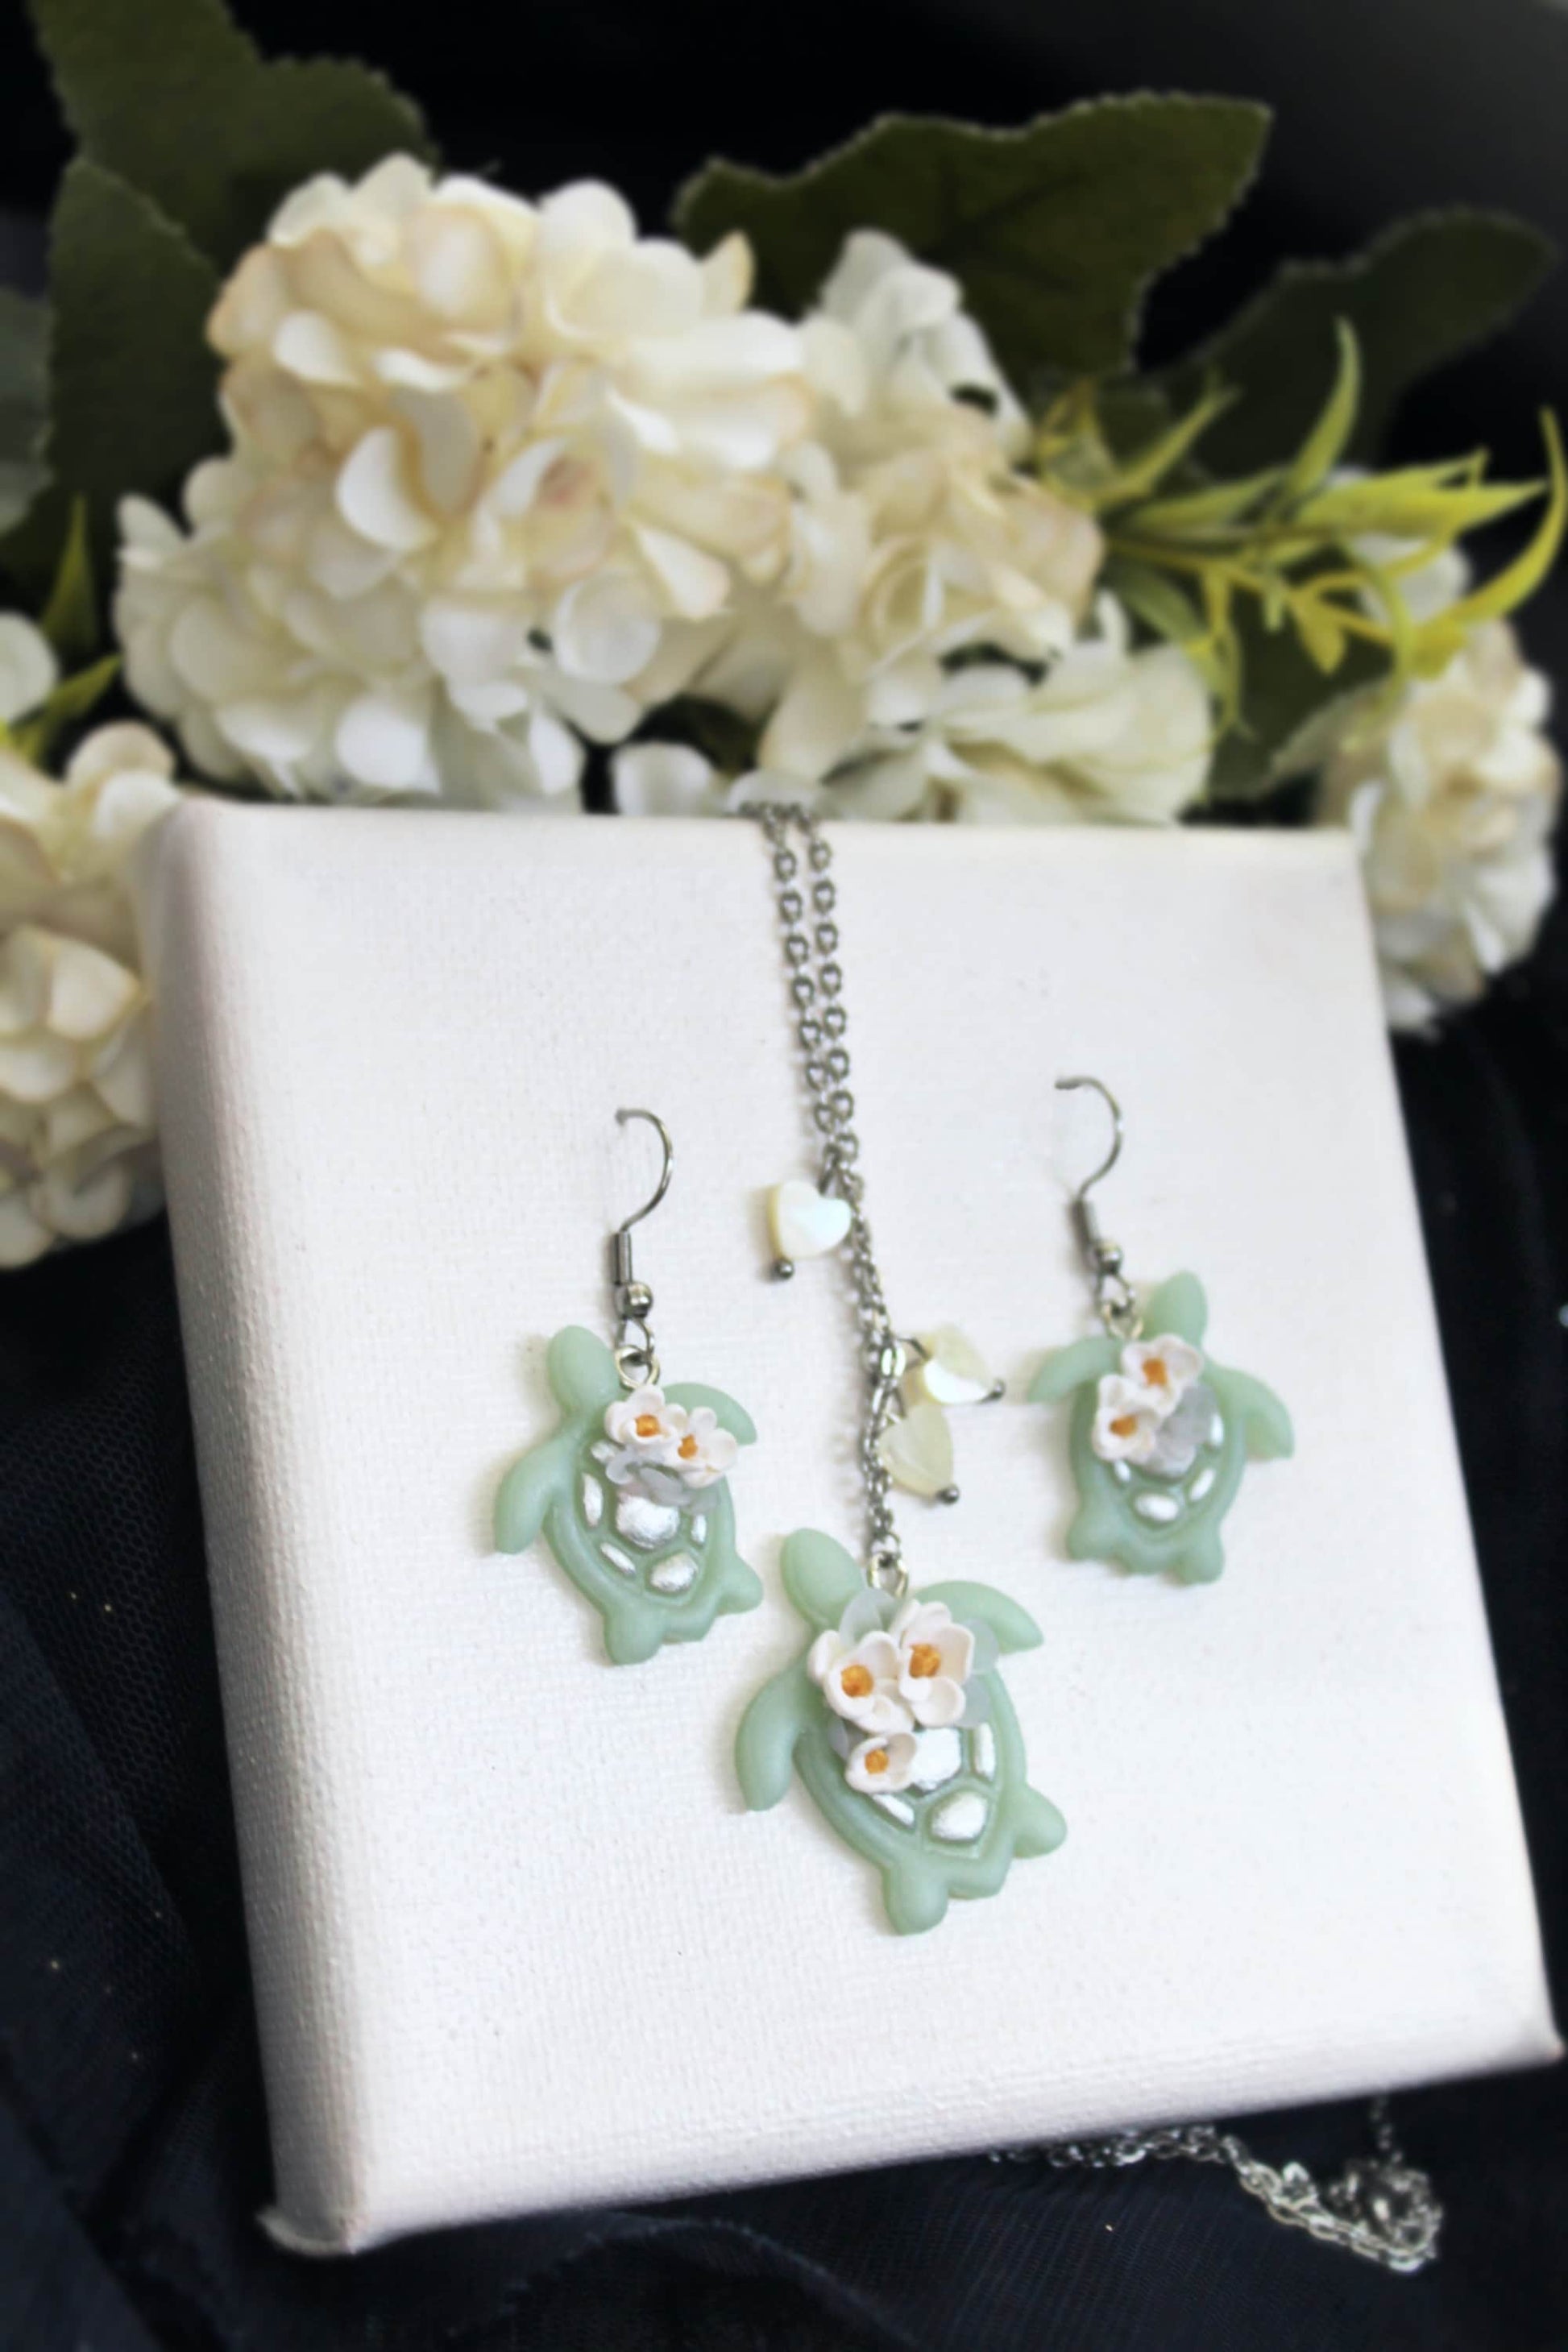 Turtle Earrings, Turtle Polymer Clay Earrings, Summer Earrings, Sea Turtle Earrings, Clay Earrings, Ocean Earrings, Gift for Her, Handmade